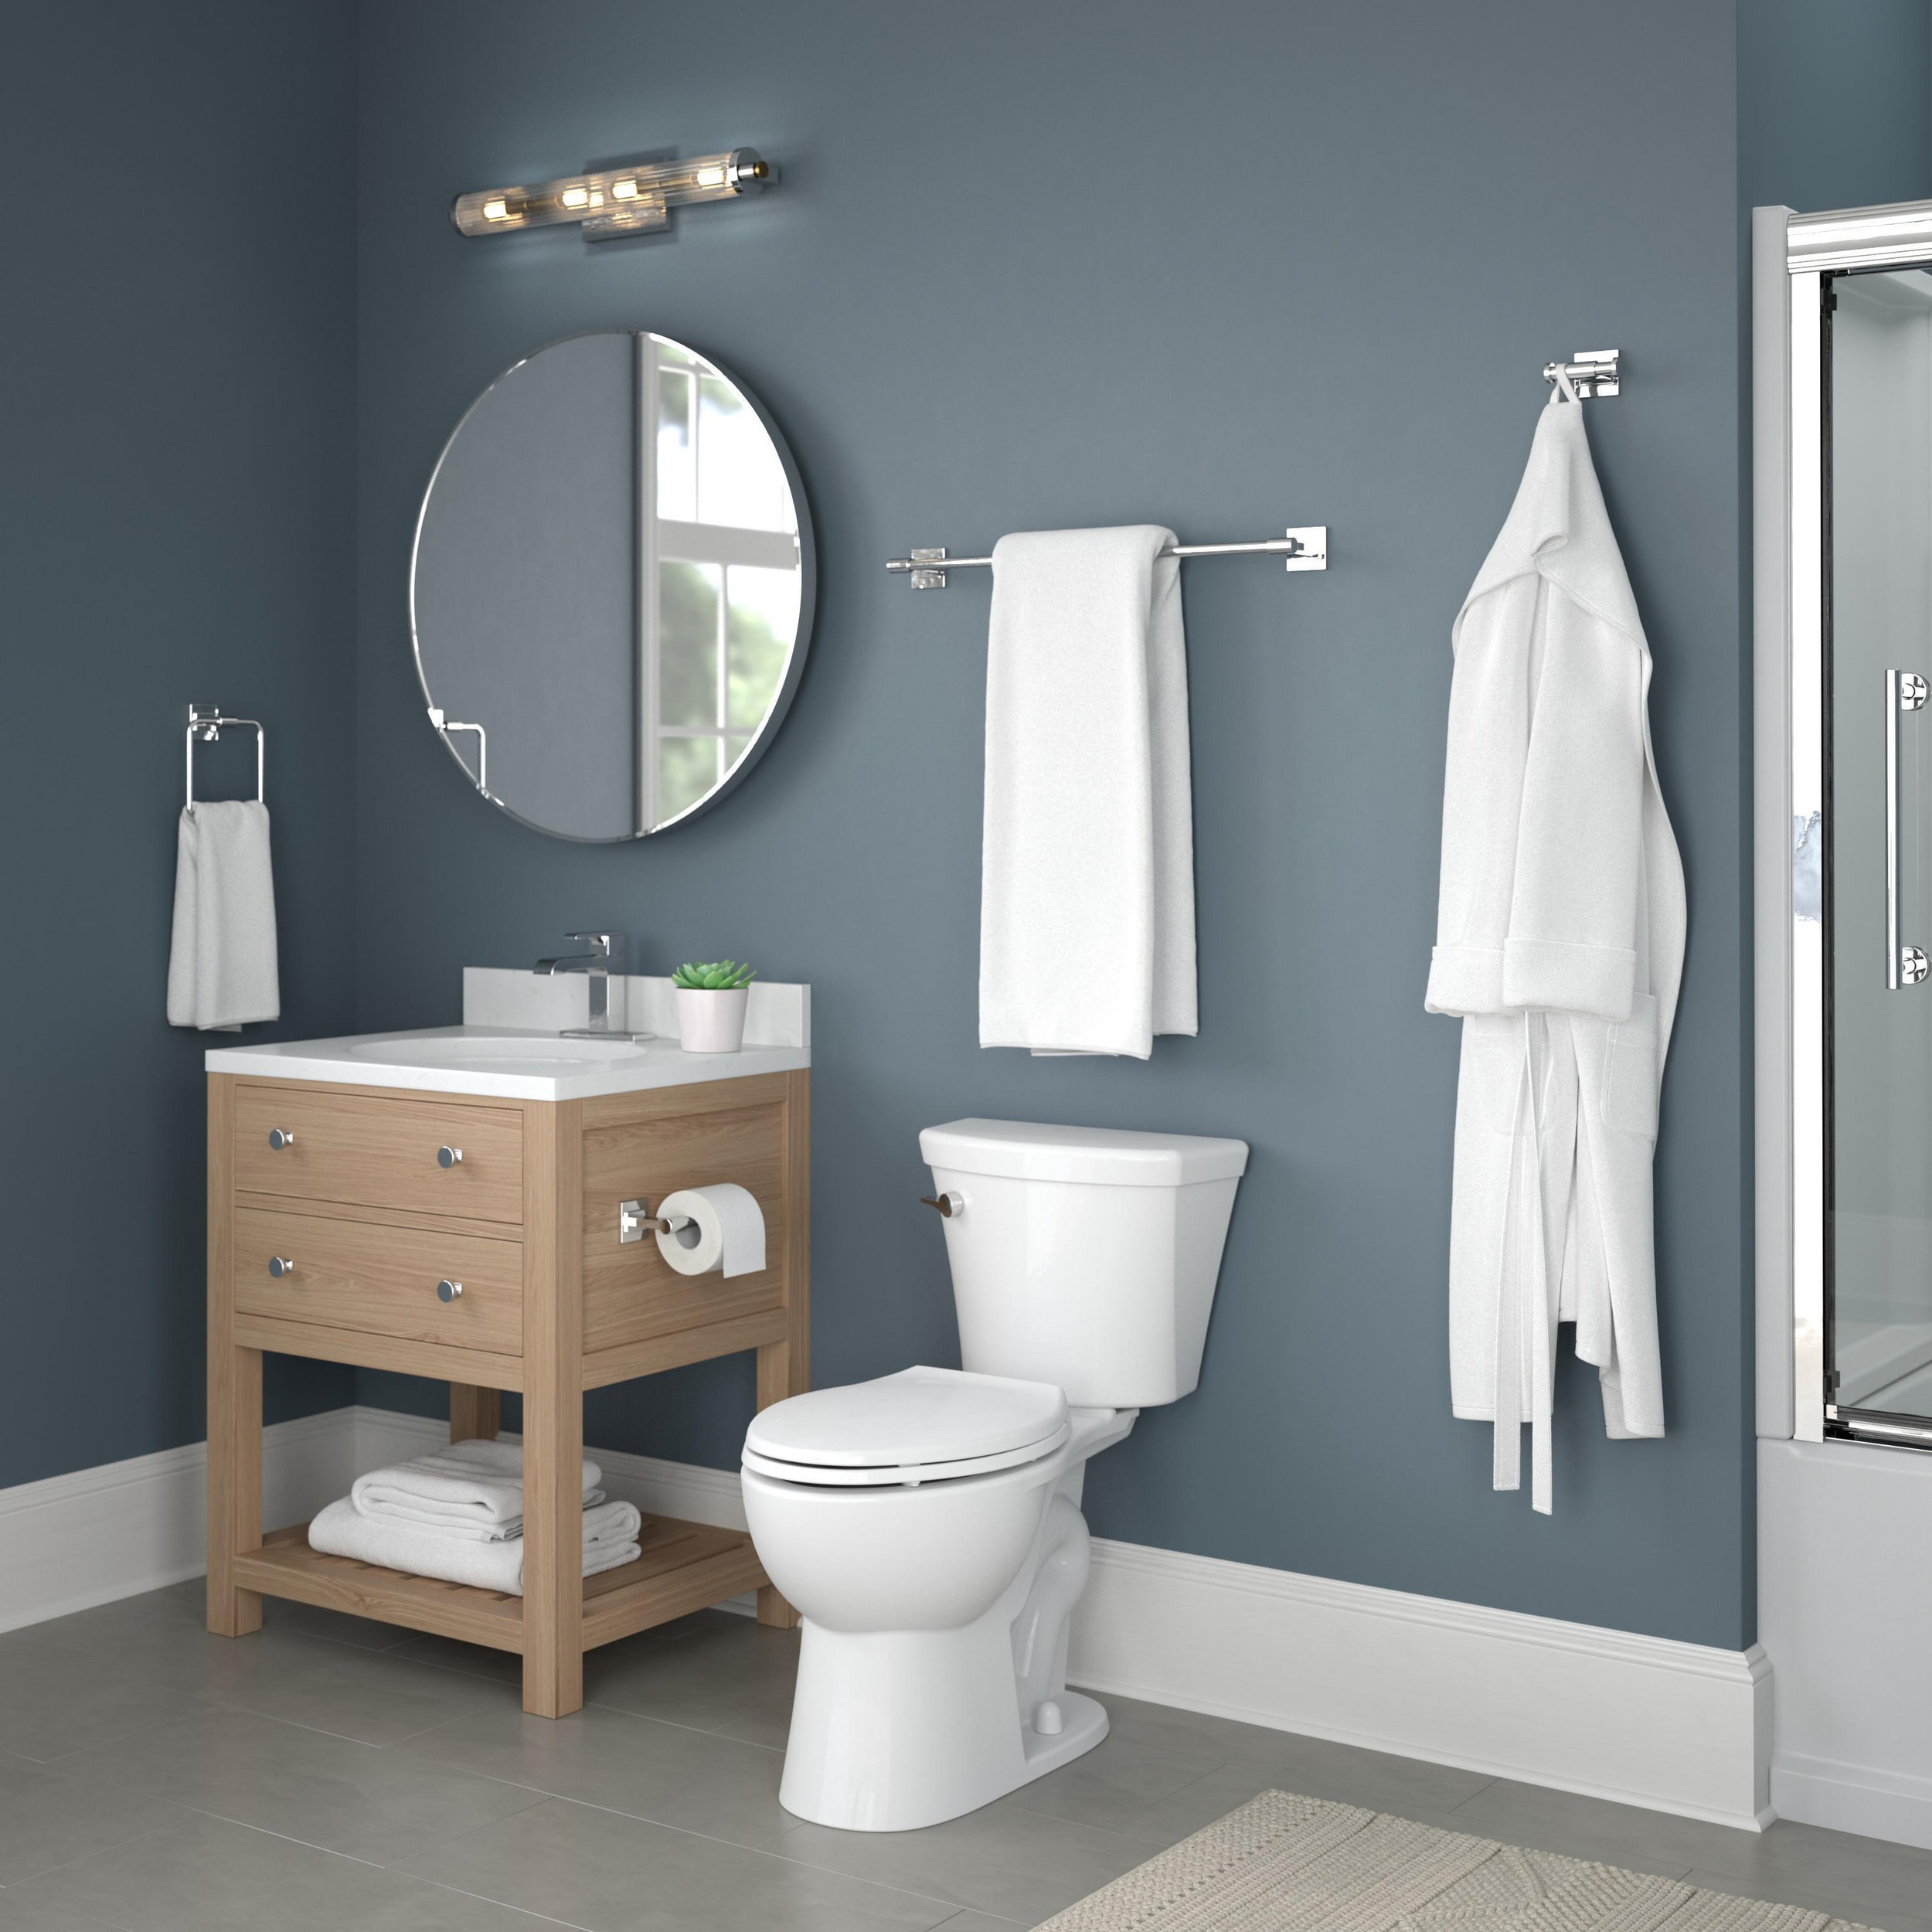 Chrome Modern Bath Accessories Towel Bar Ring Toilet Bathroom